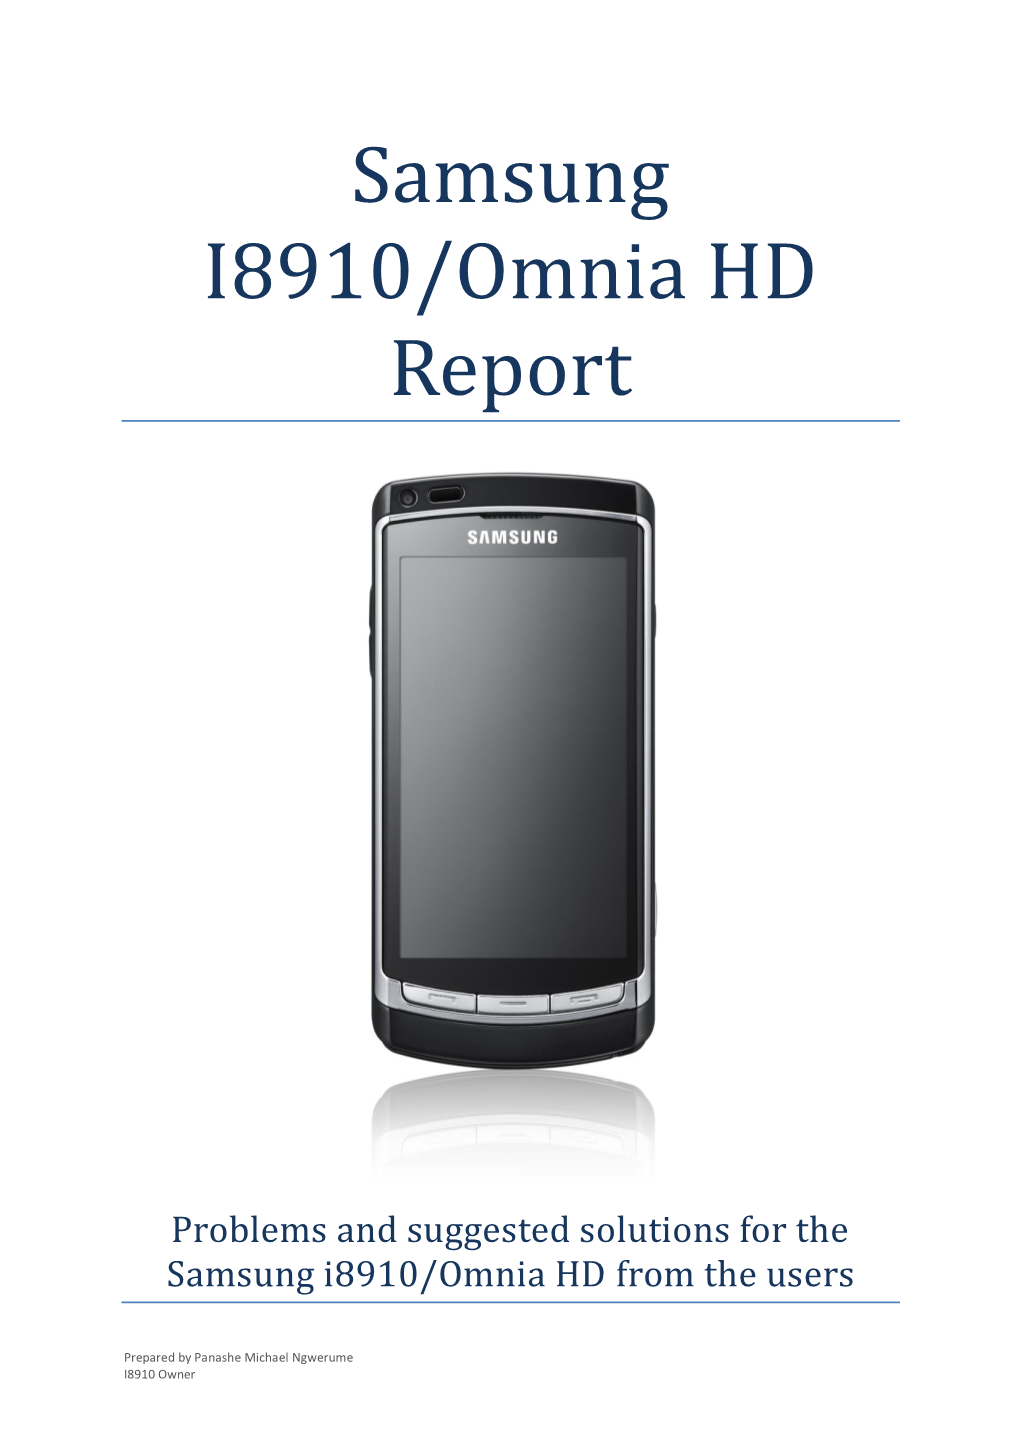 Report on the Samsung I8910/Omnia HD